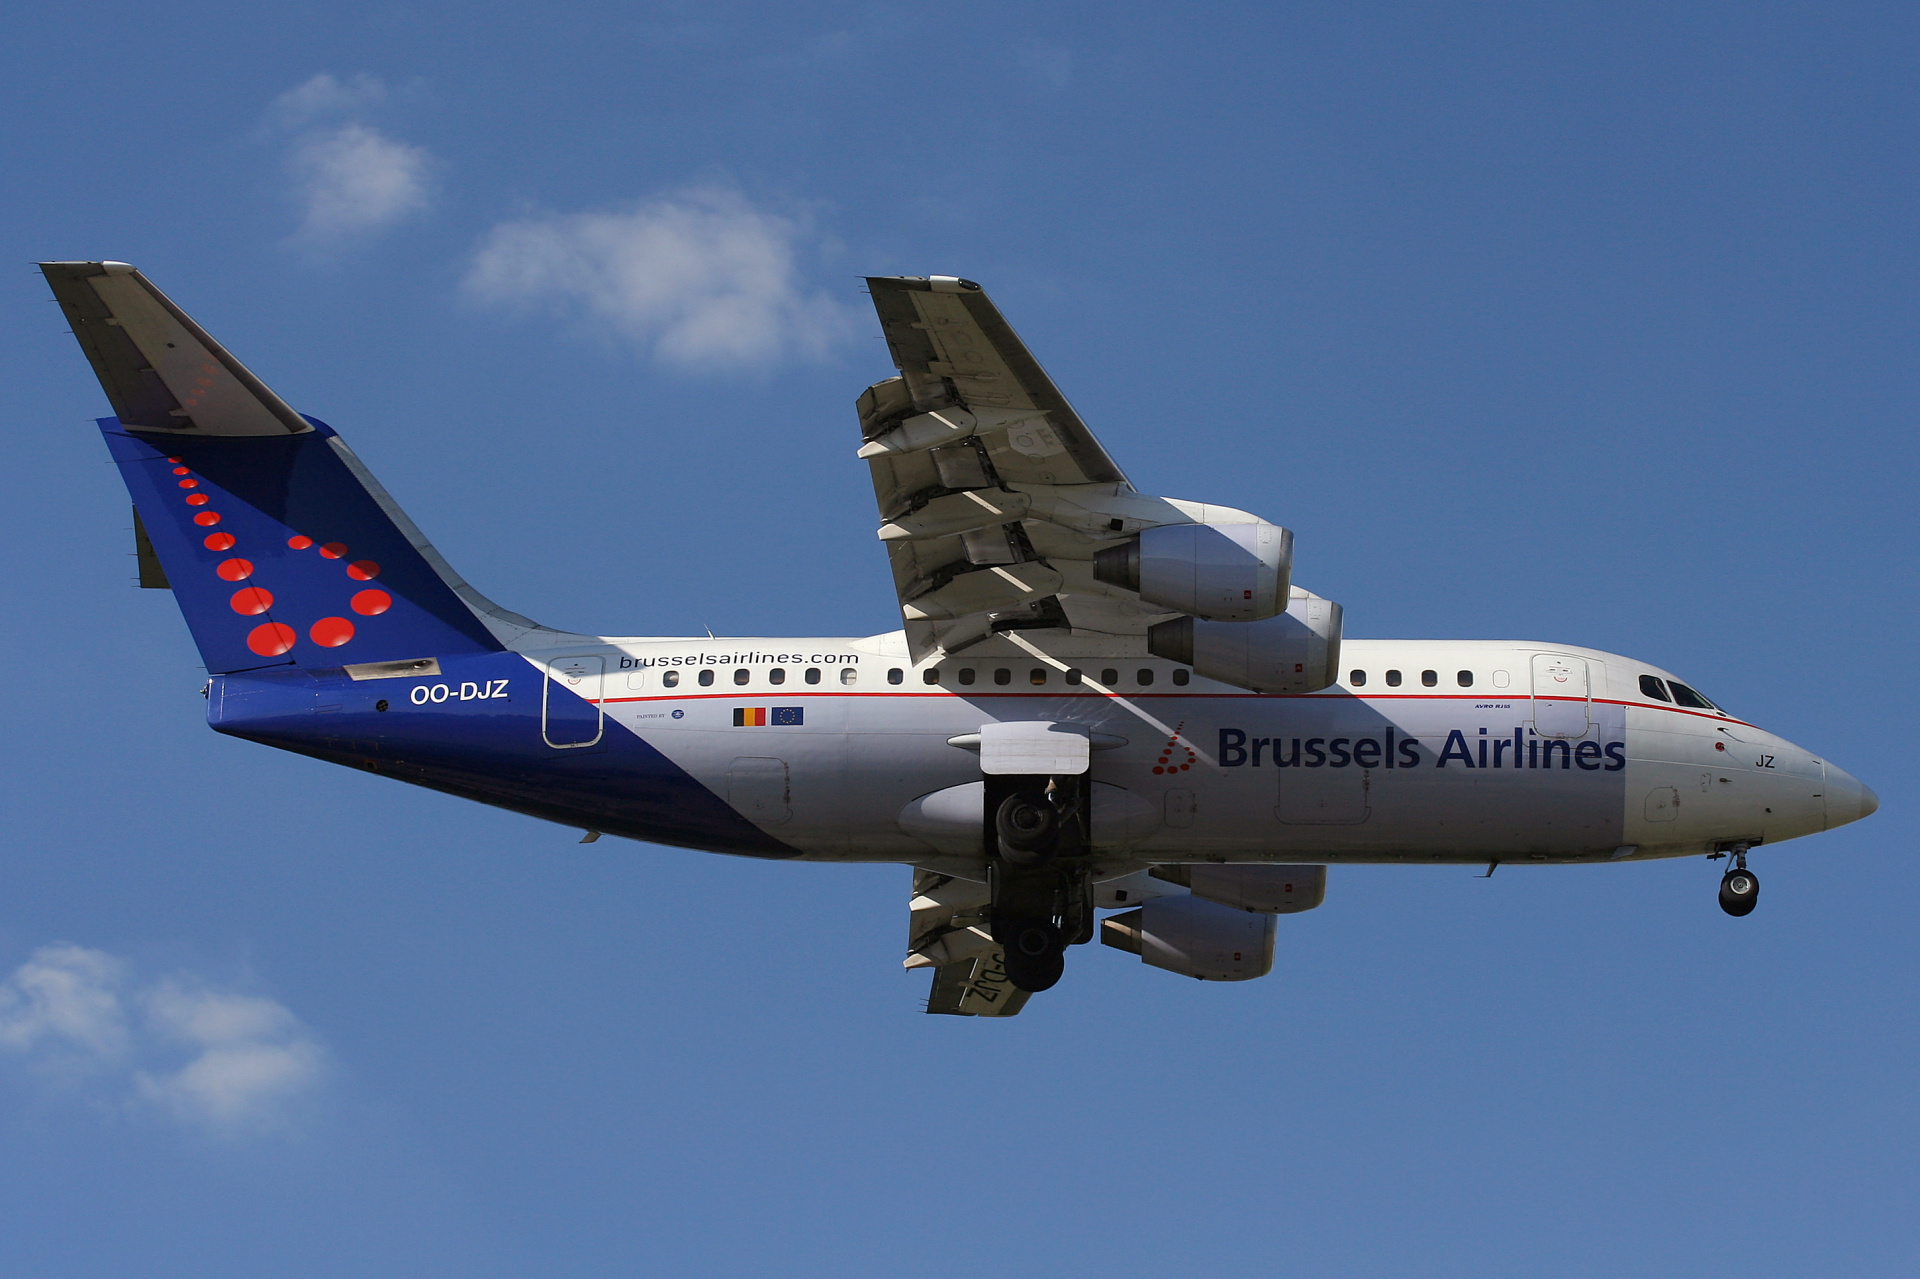 OO-DJZ (Samoloty » Spotting na EPWA » BAe 146 i pochodne wersje » Avro RJ85 » Brussels Airlines)